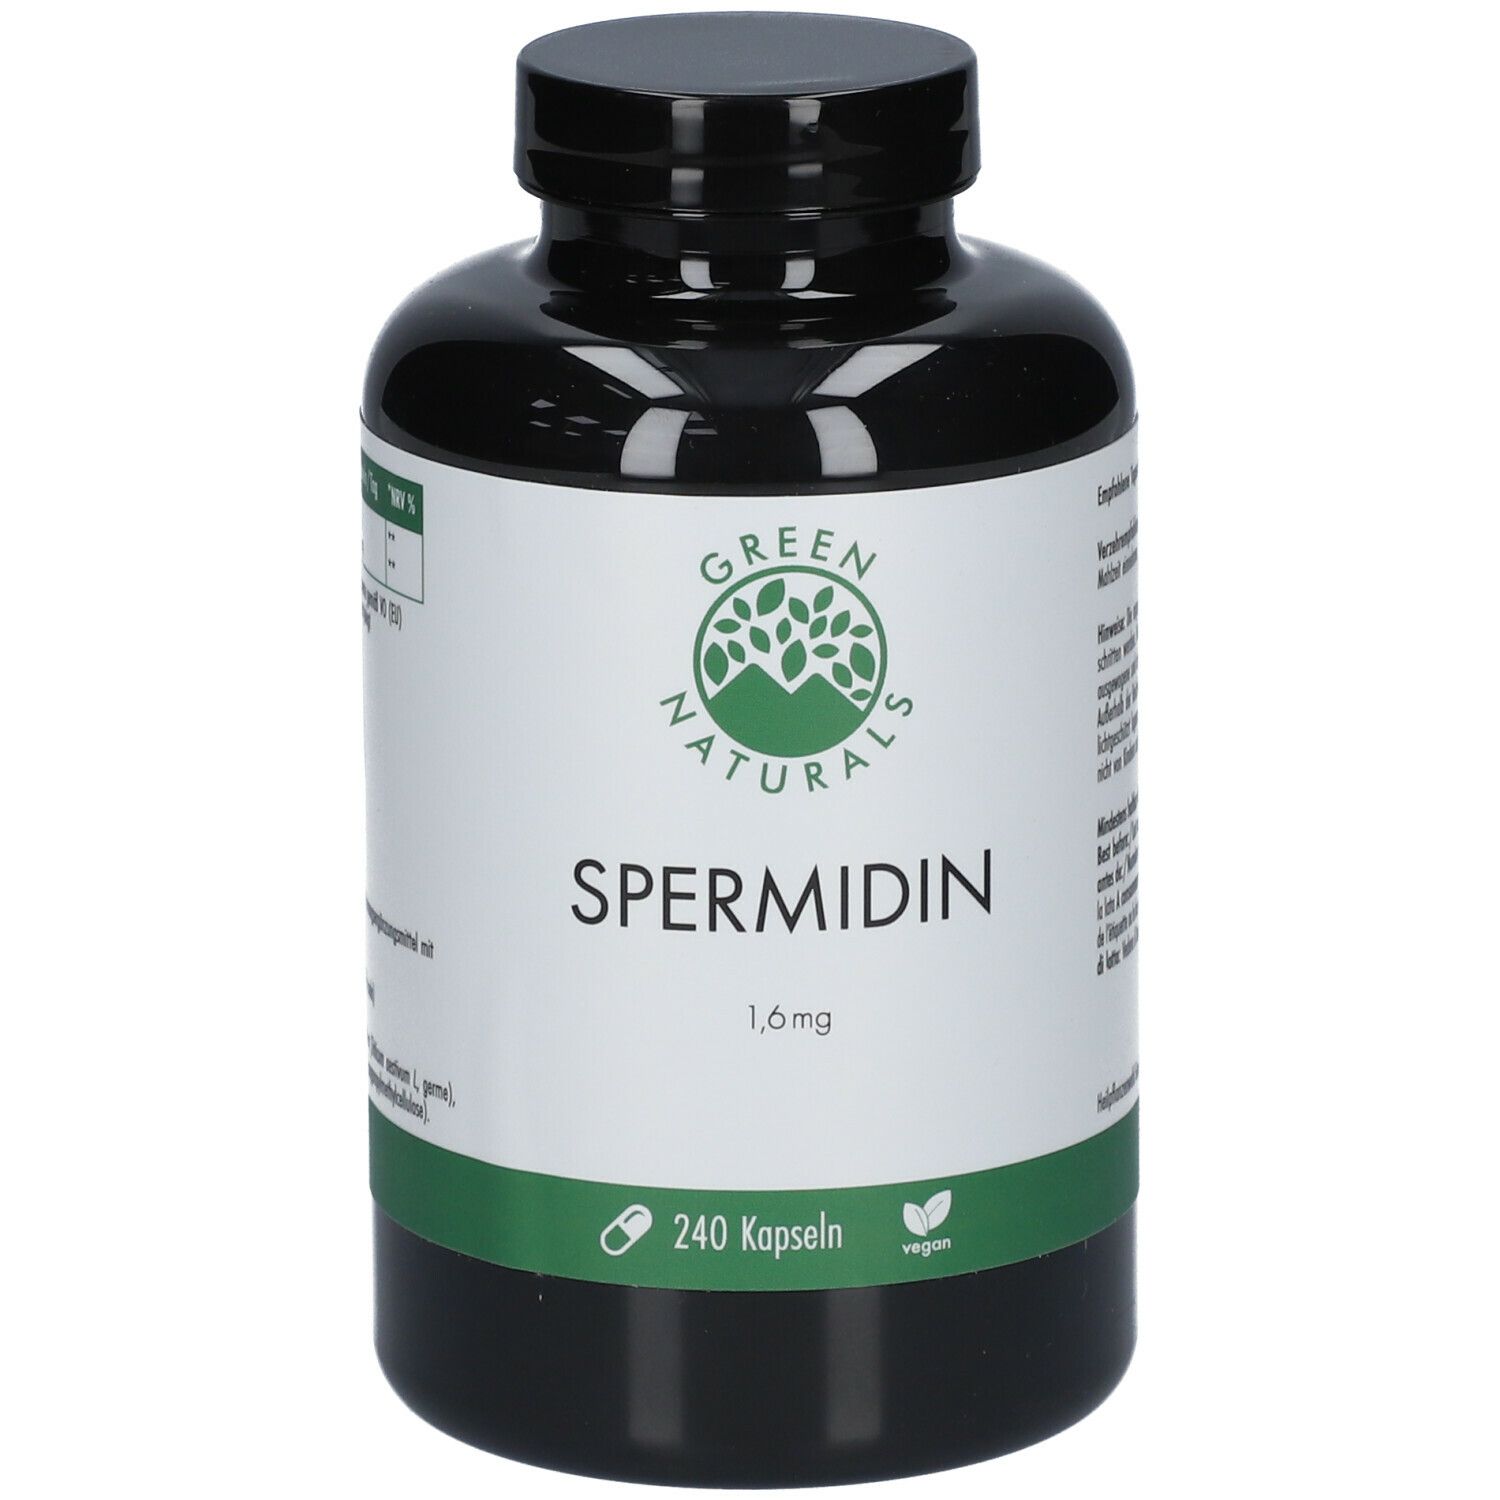 GREEN NATURALS Spermidin 1,6 mg vegan